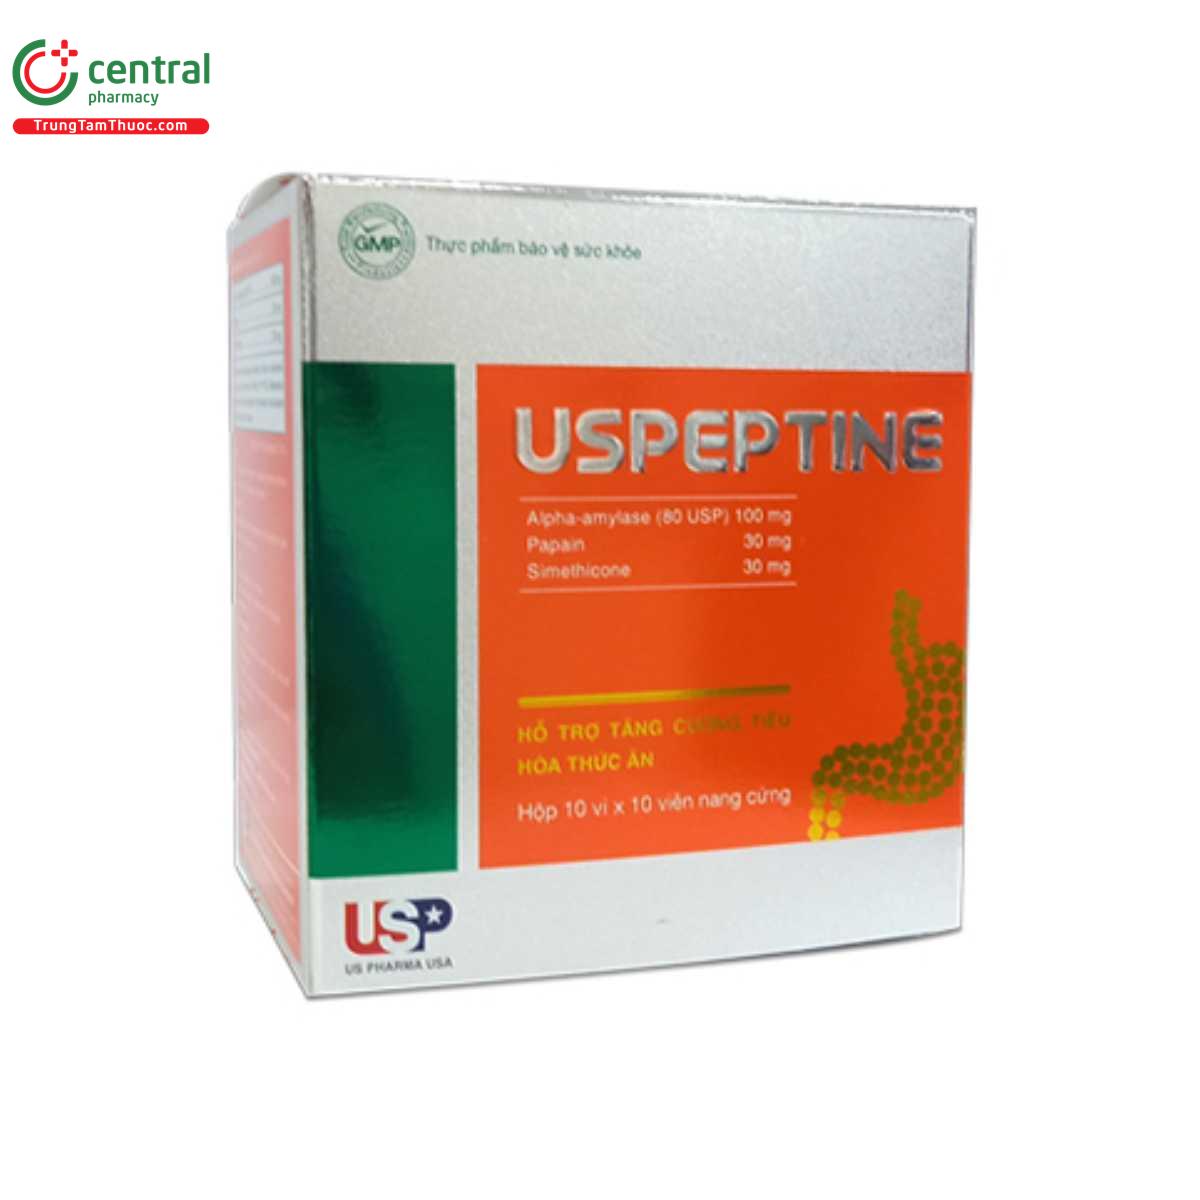 uspeptine usp 2 A0384